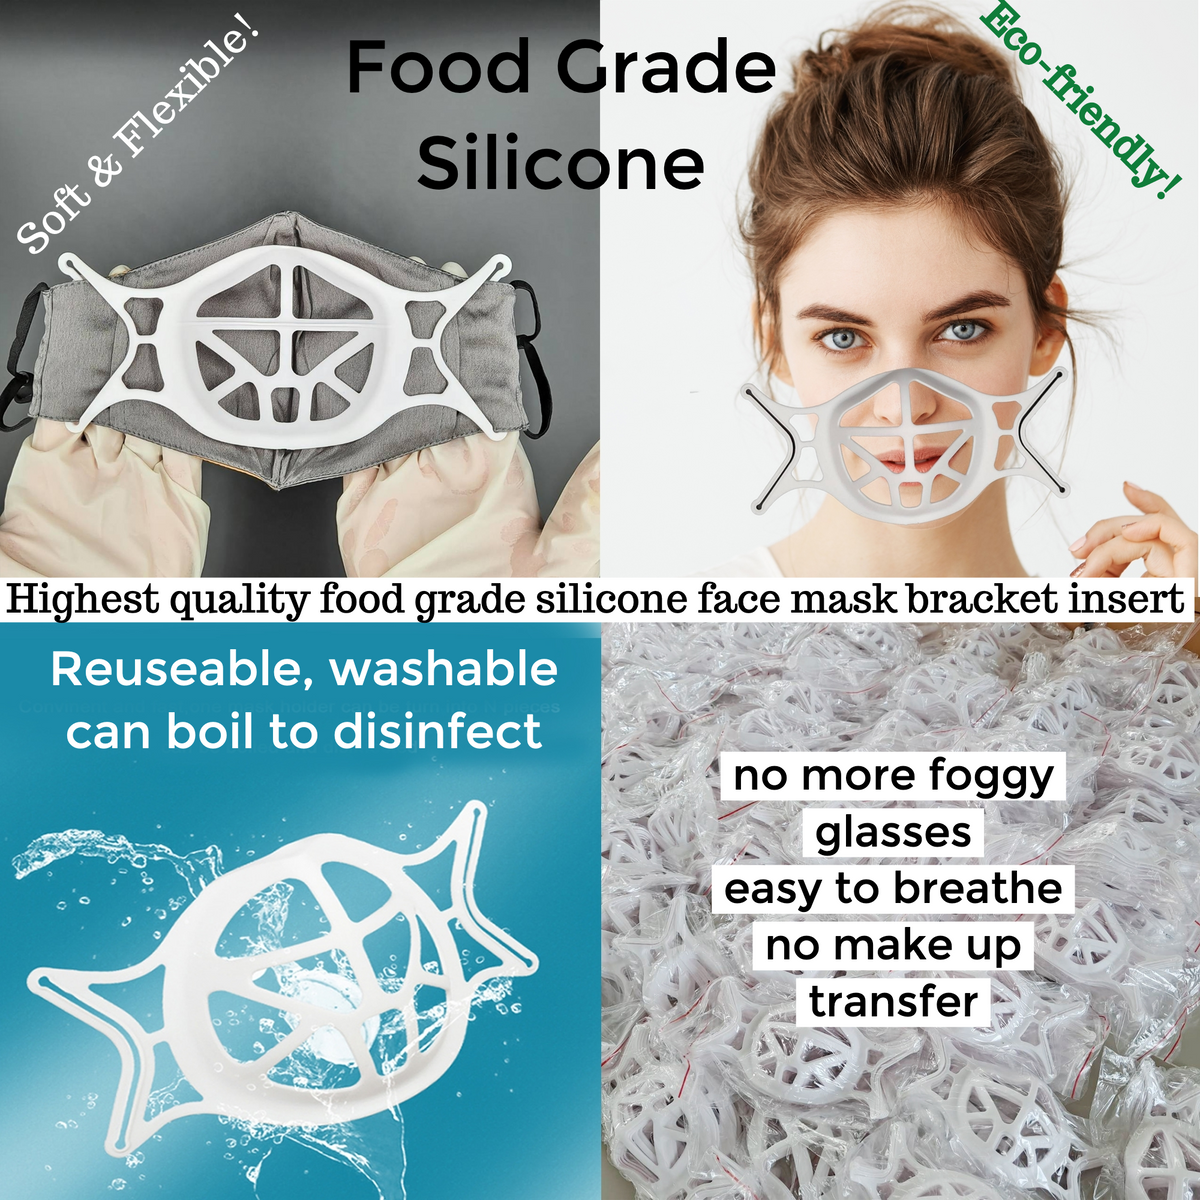 New Product! Food Grade Silicone Mask Bracket